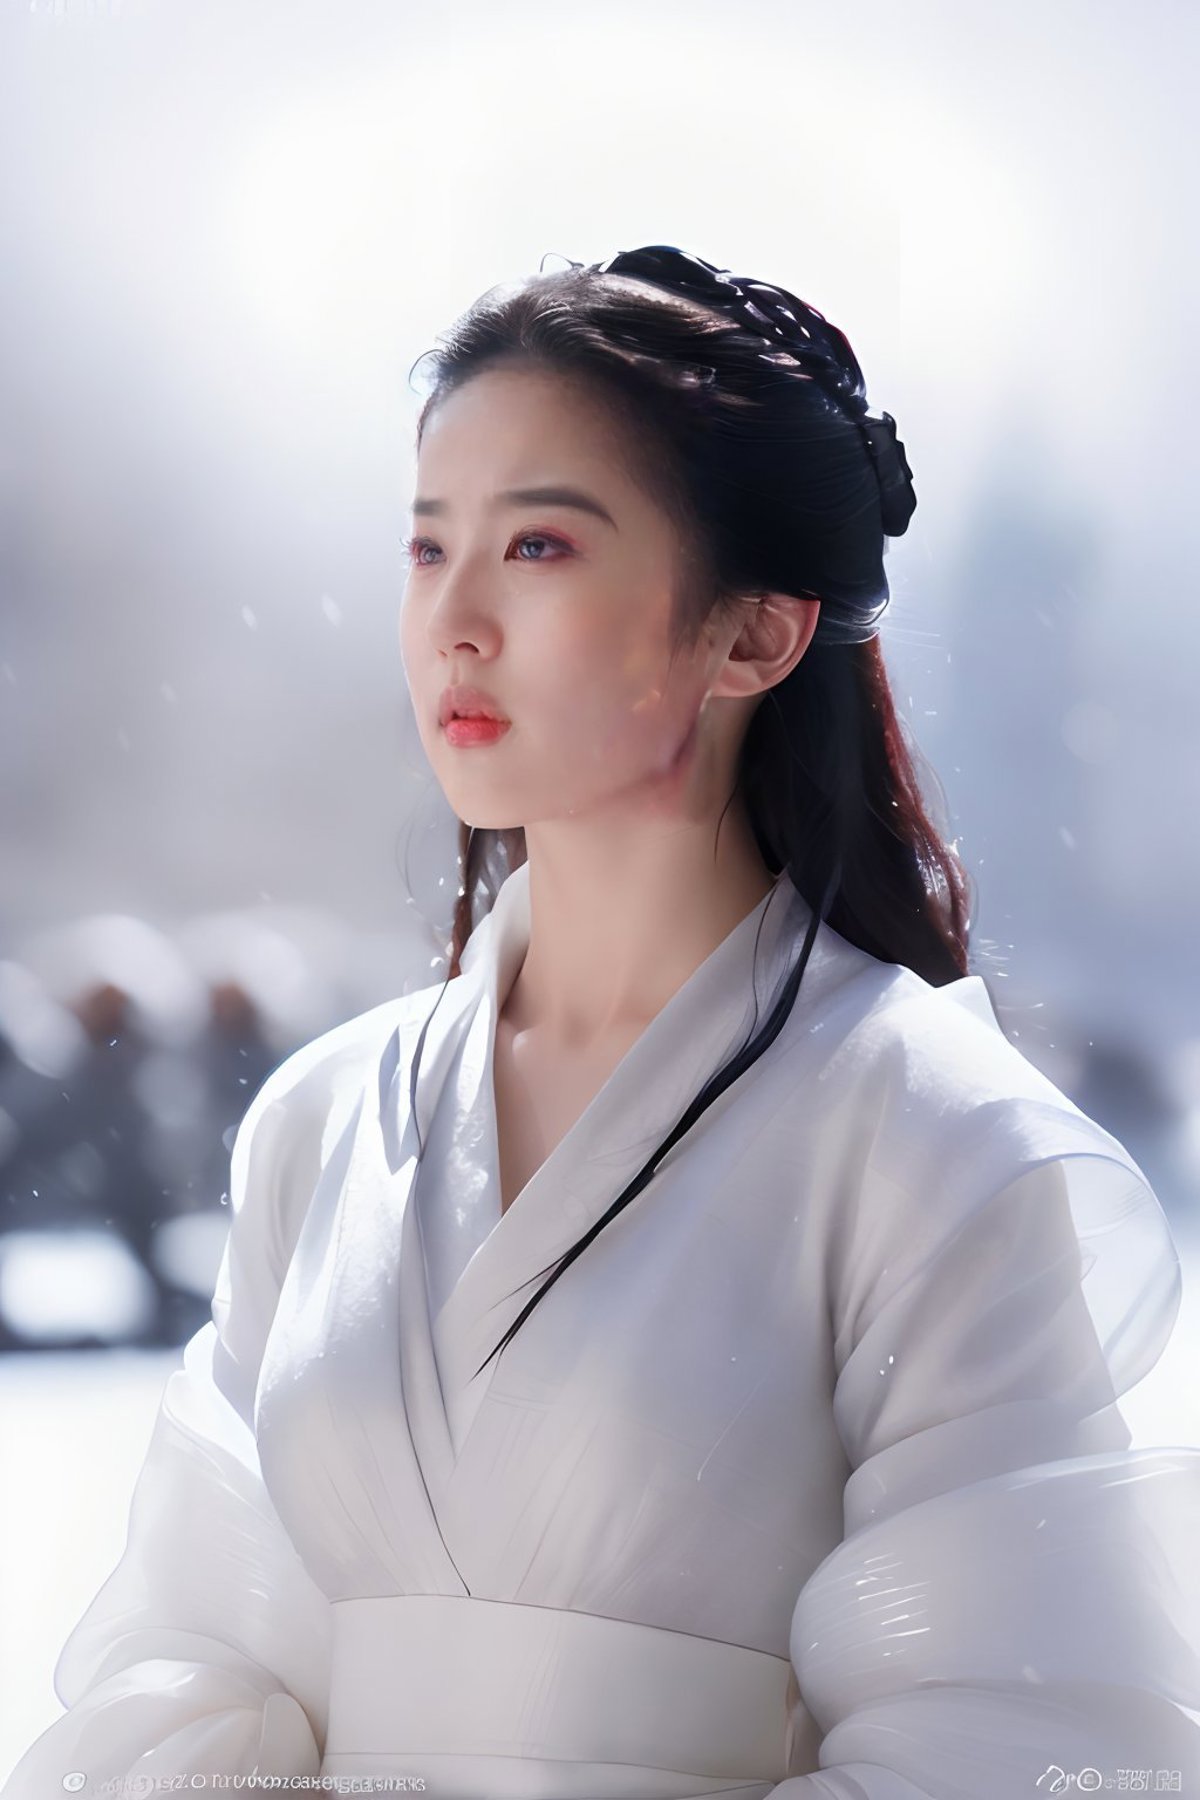 Liu yifei young | 刘亦菲少女时期 | 神仙姐姐 image by orcface